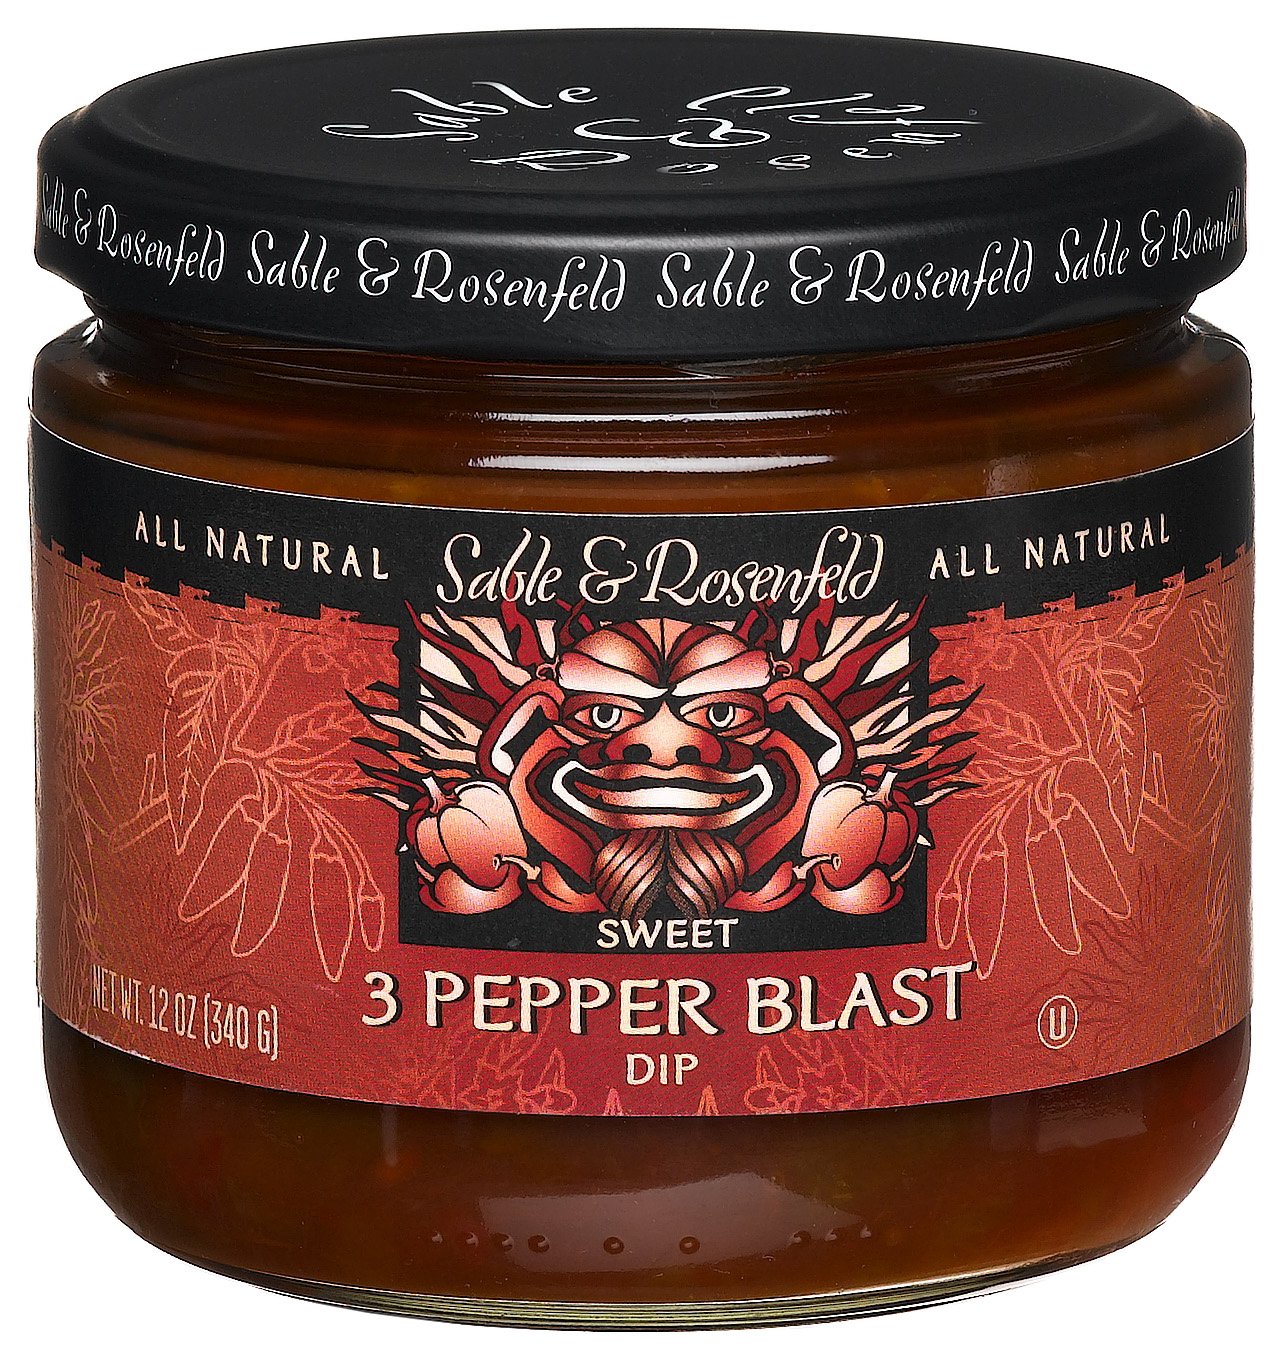 Sable and Rosenfeld 3 Pepper Blast Dip, 12-Ounce Glass Jars (Pack of 6)